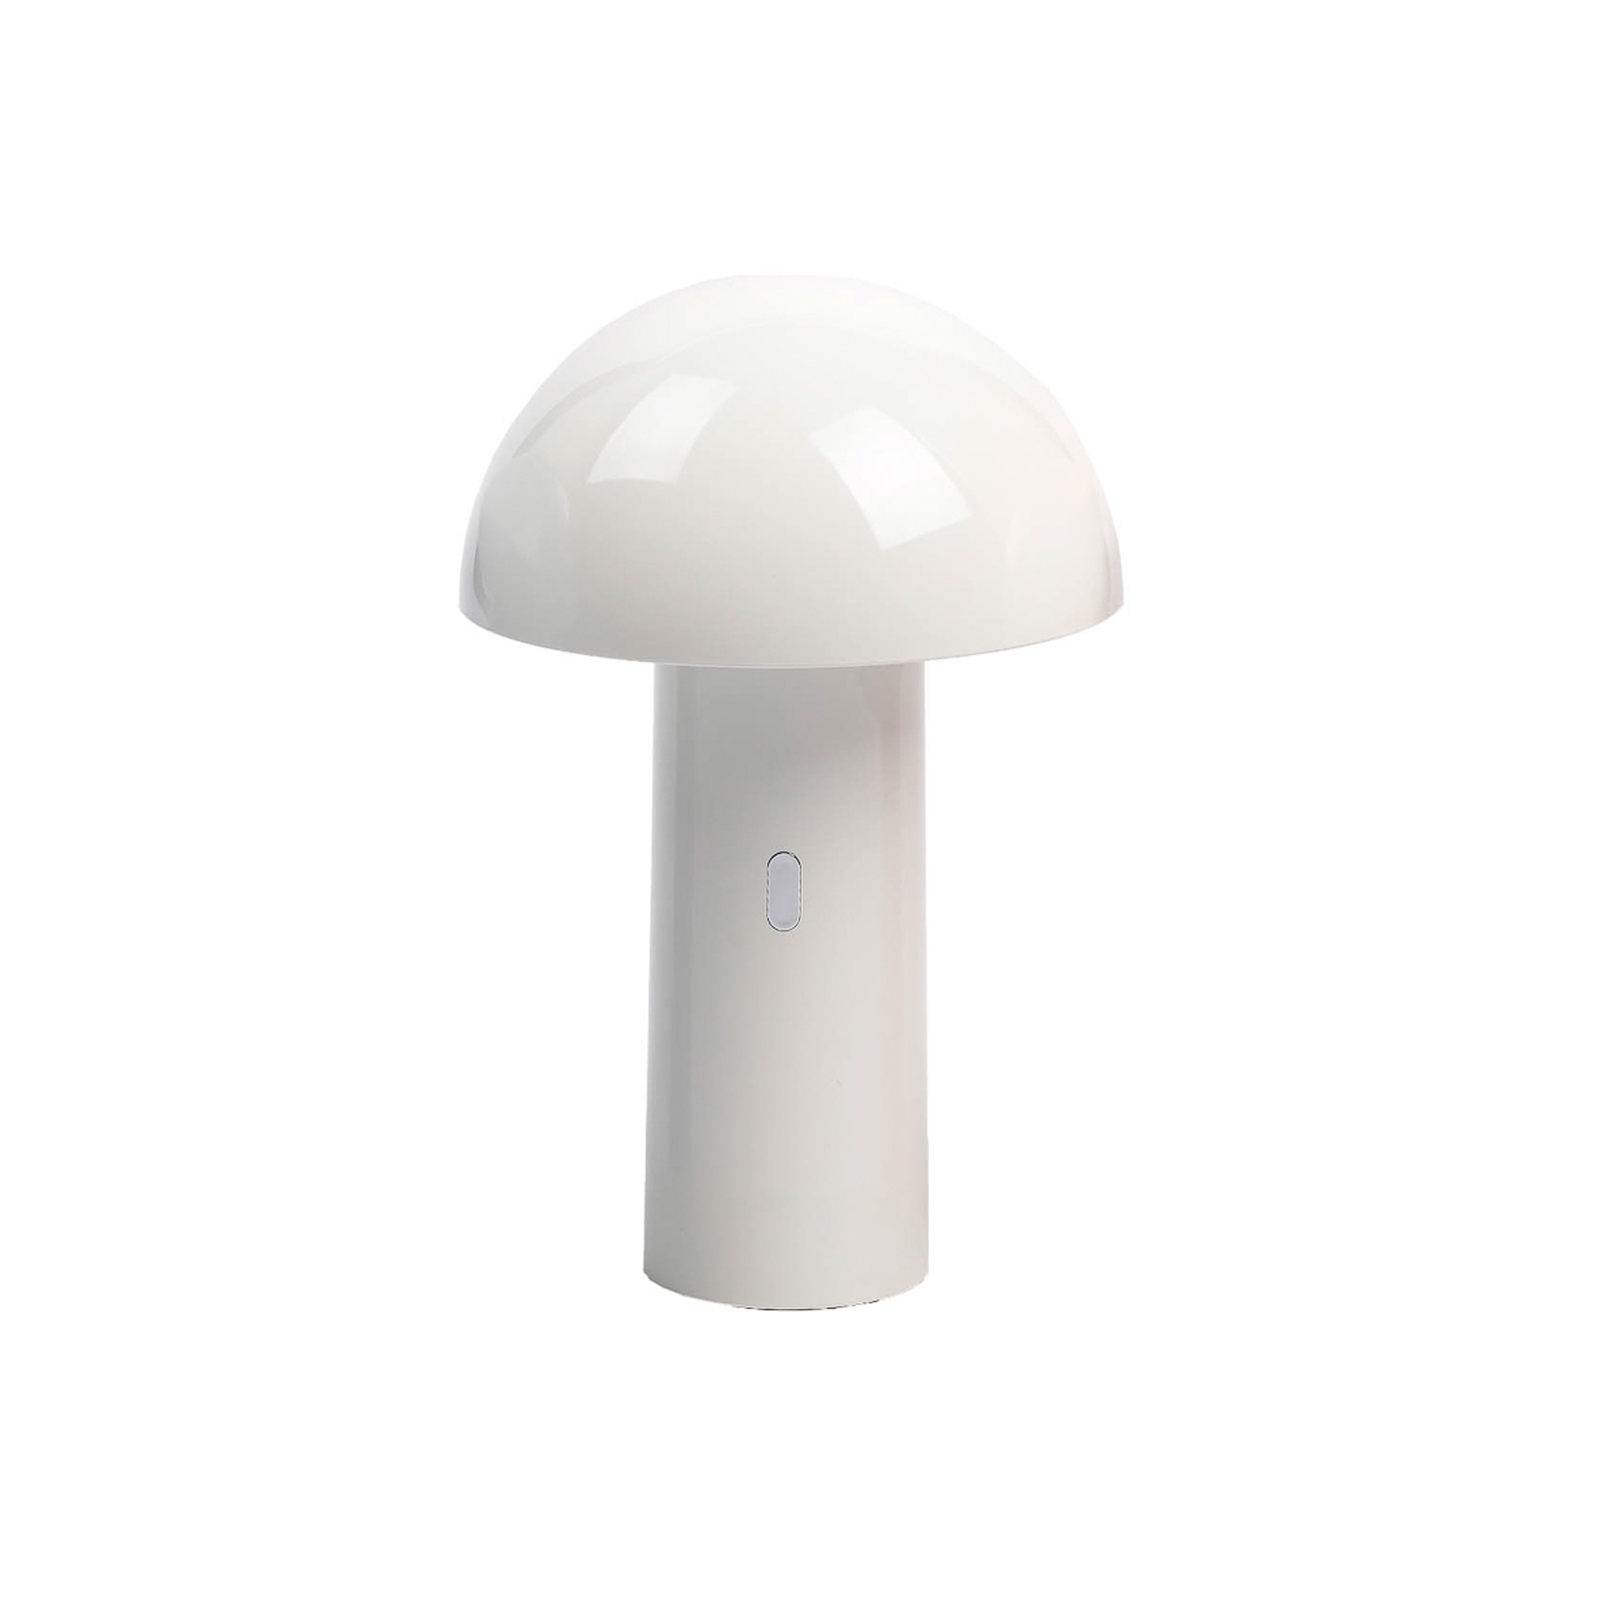 Aluminor Capsule lampe à poser LED mobile, blanche